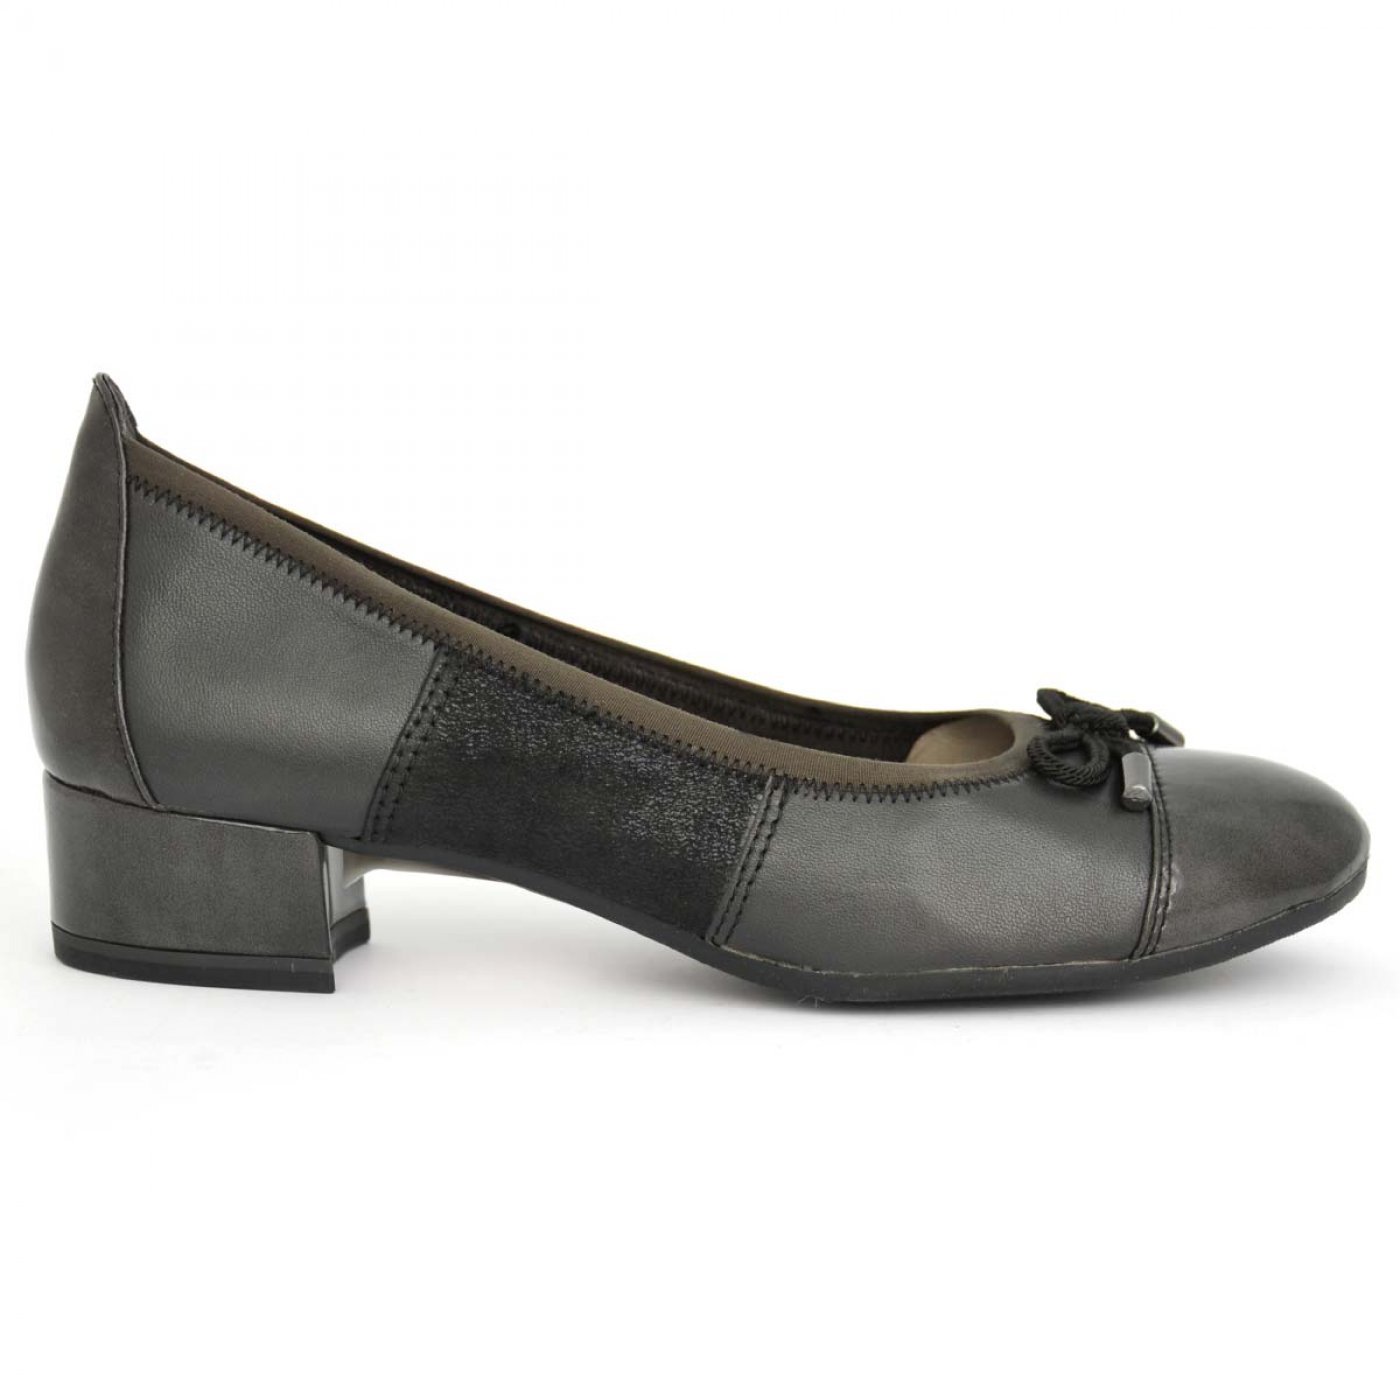 Tamaris pumps buy online pumps - modish grey low heel women pump shoes | tamaris germany PNEUKFA